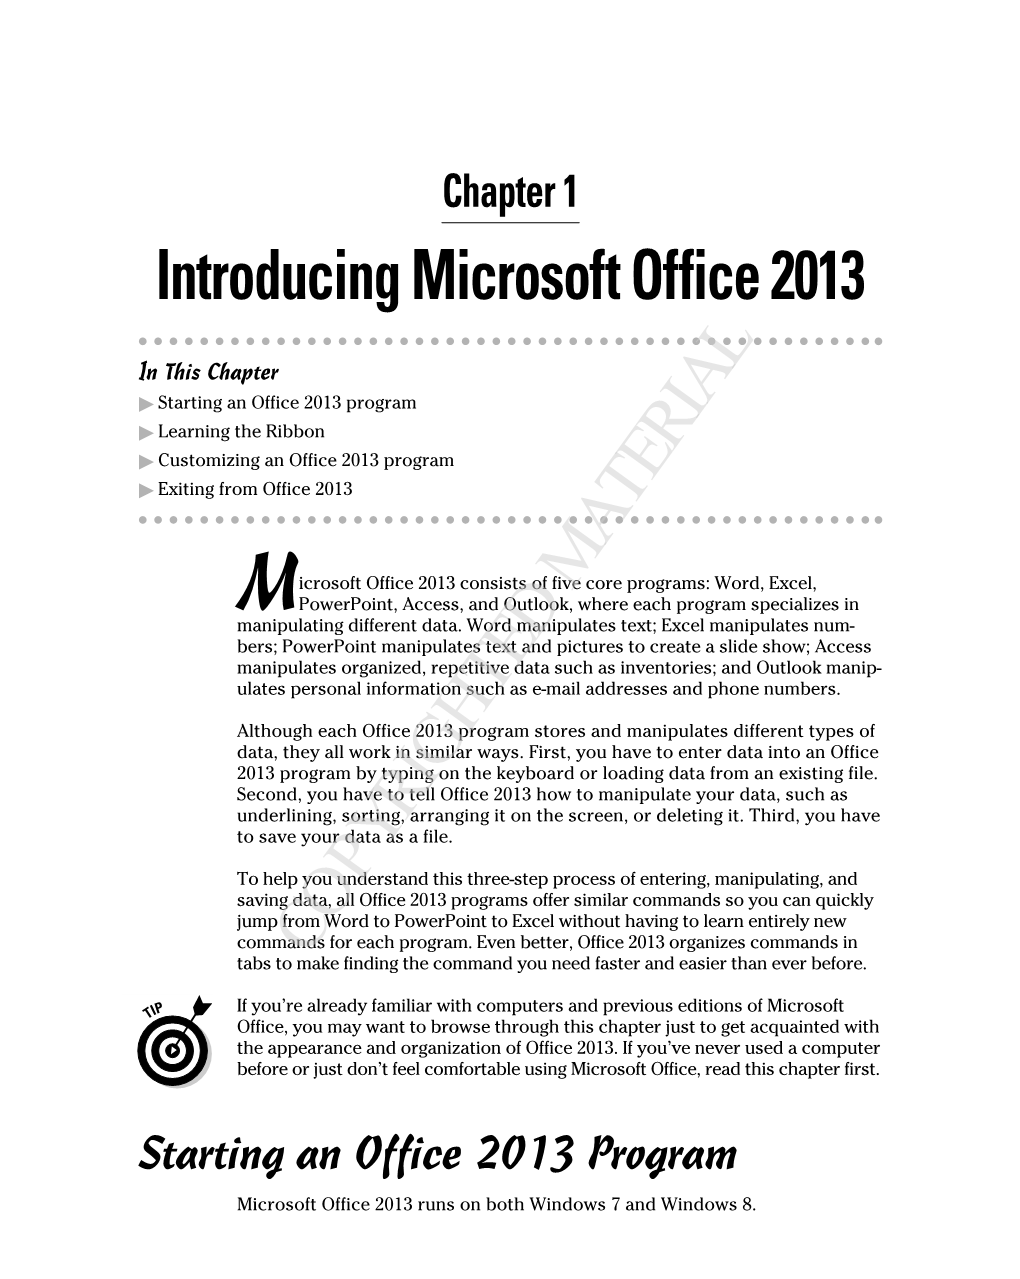 Introducing Microsoft Office 2013